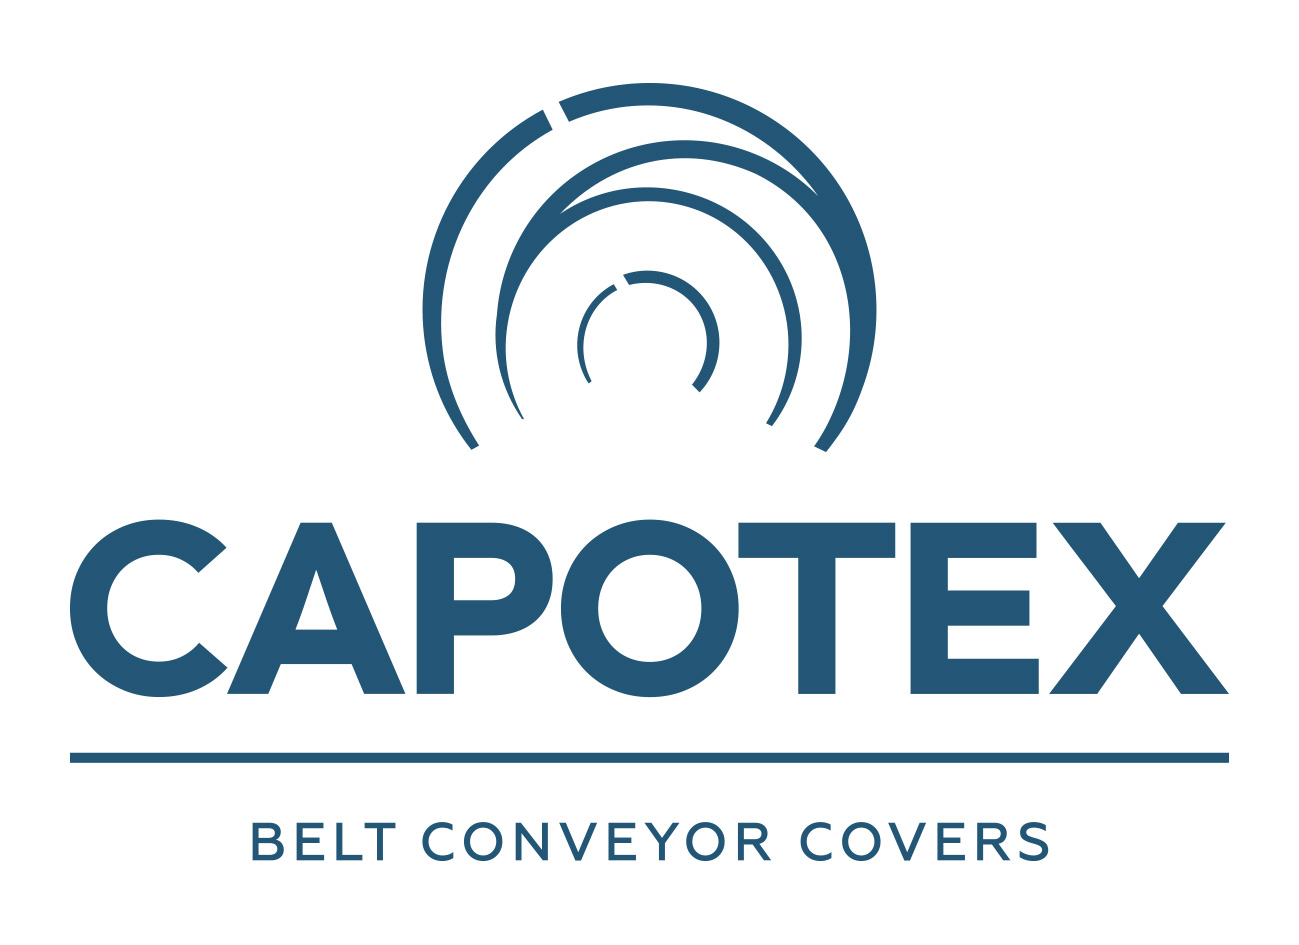 Capotex logo complete